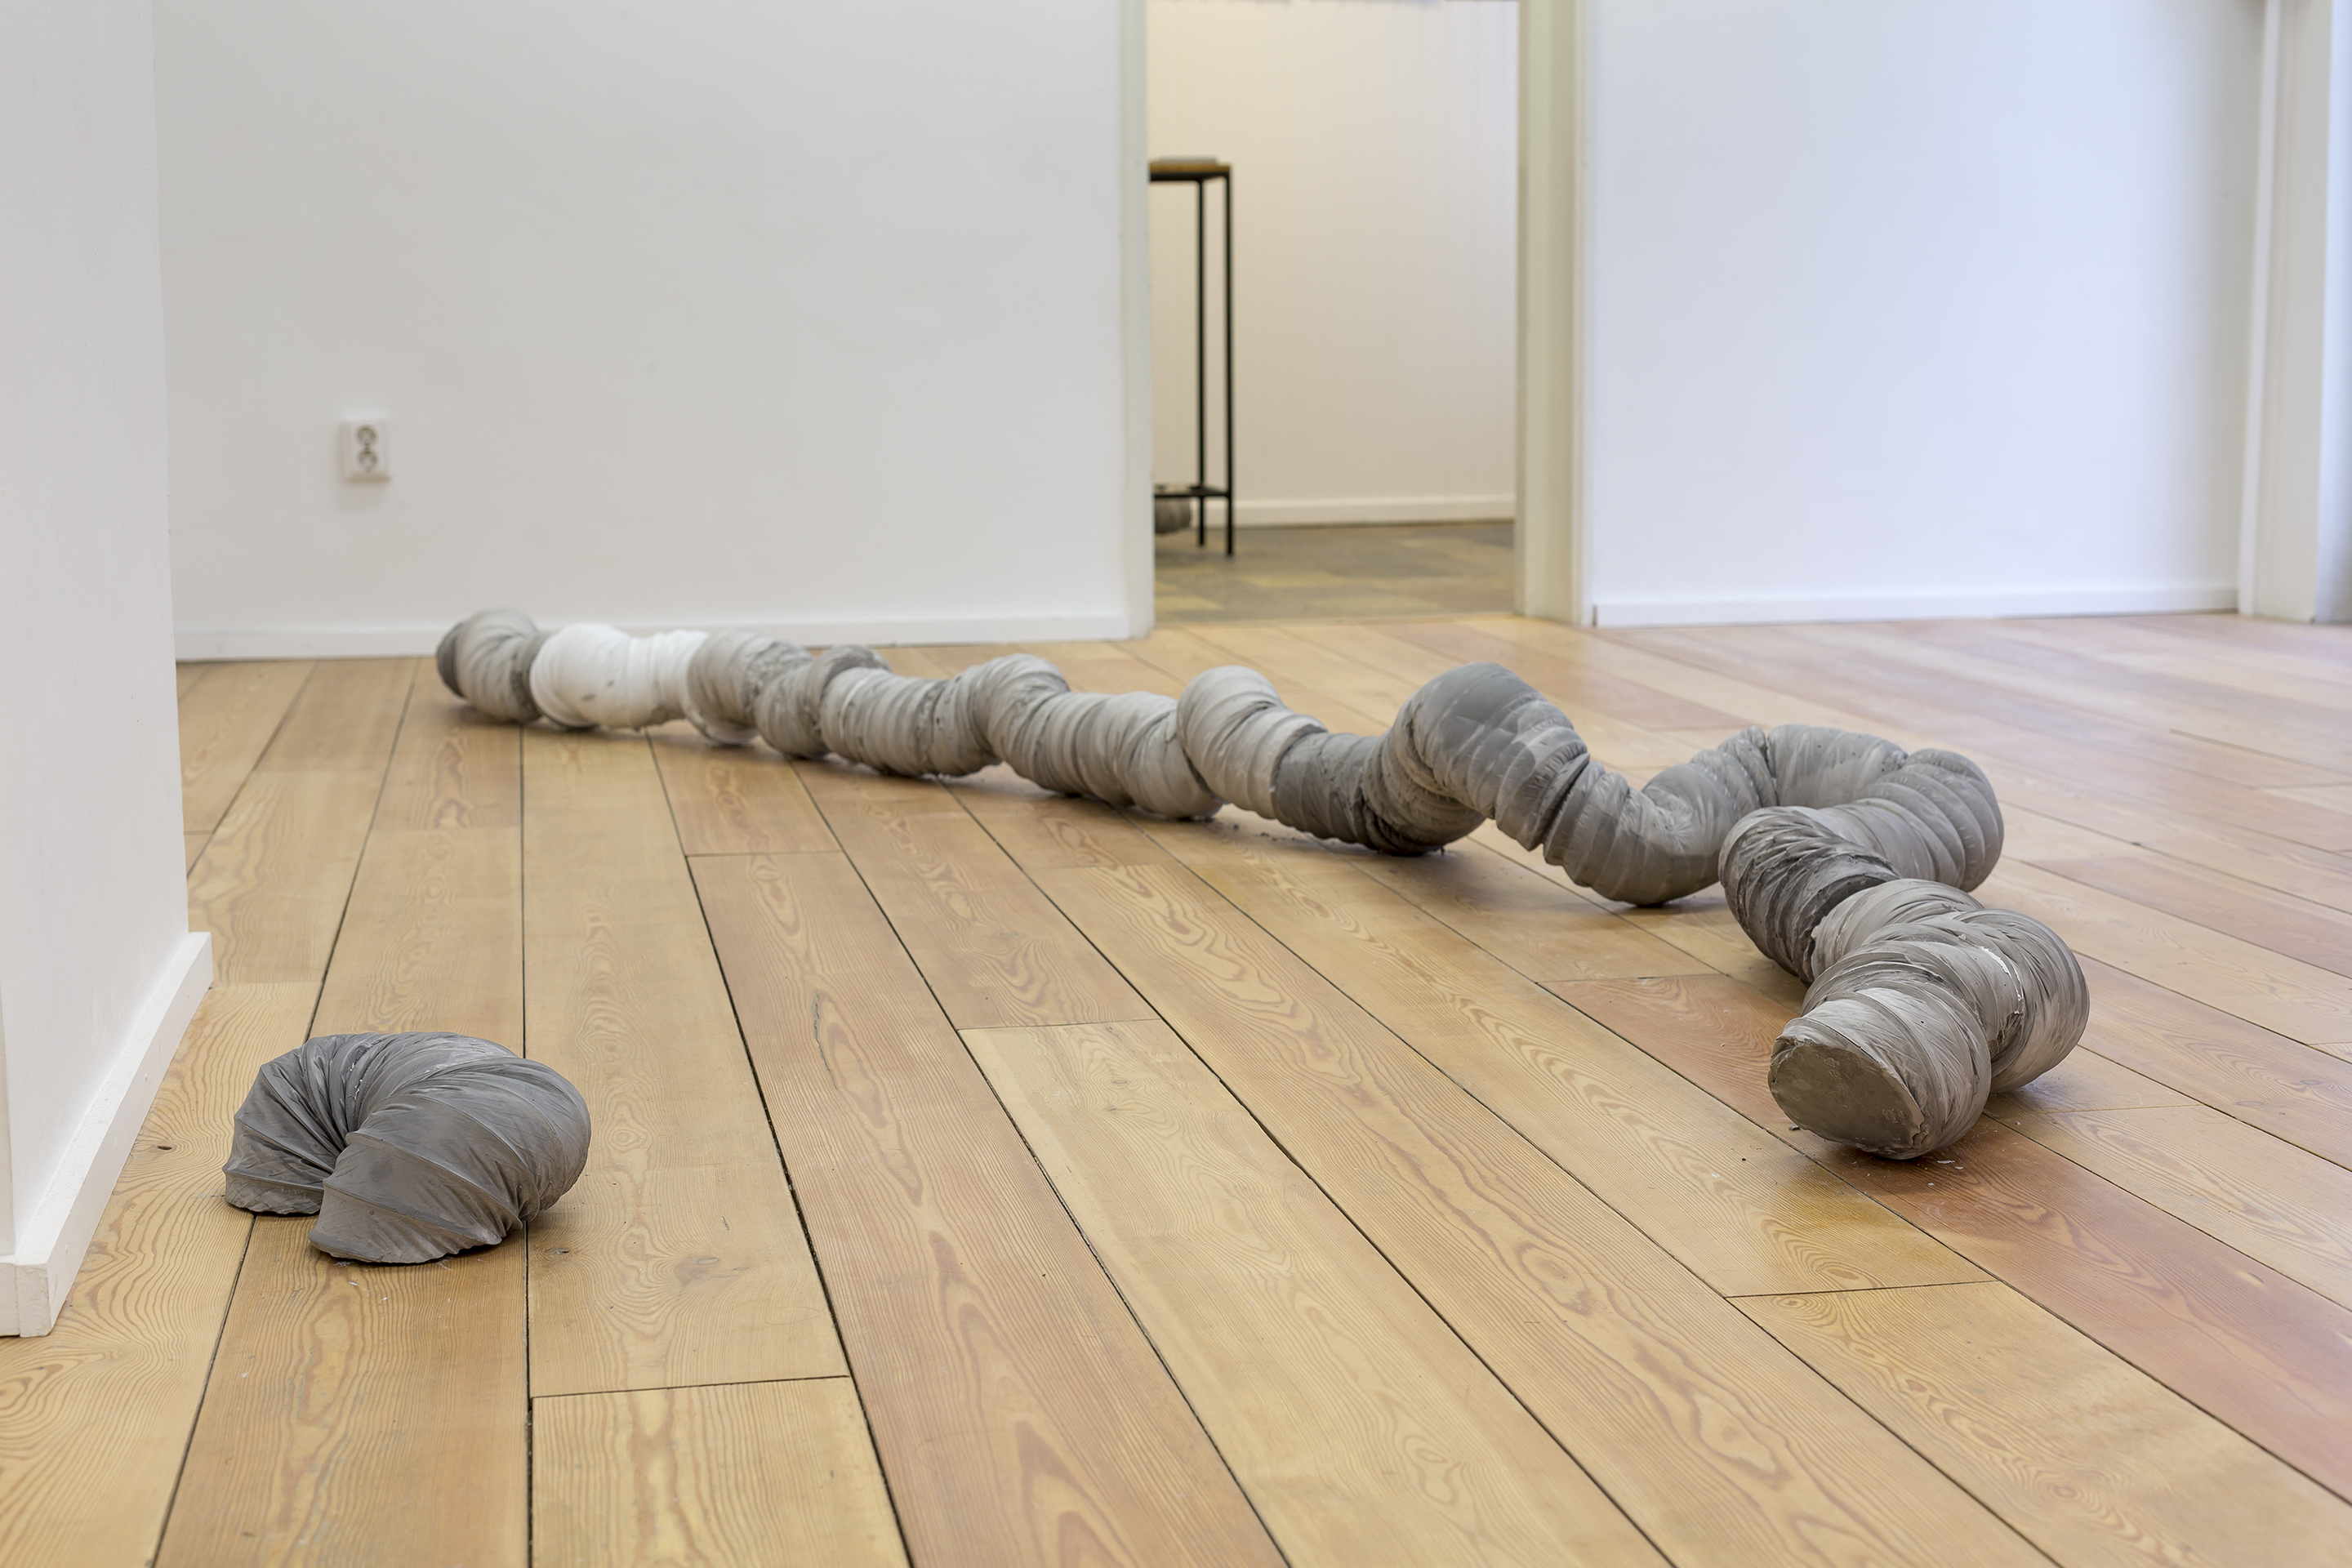 'Untitled (crawl)' by Sara Bjarland